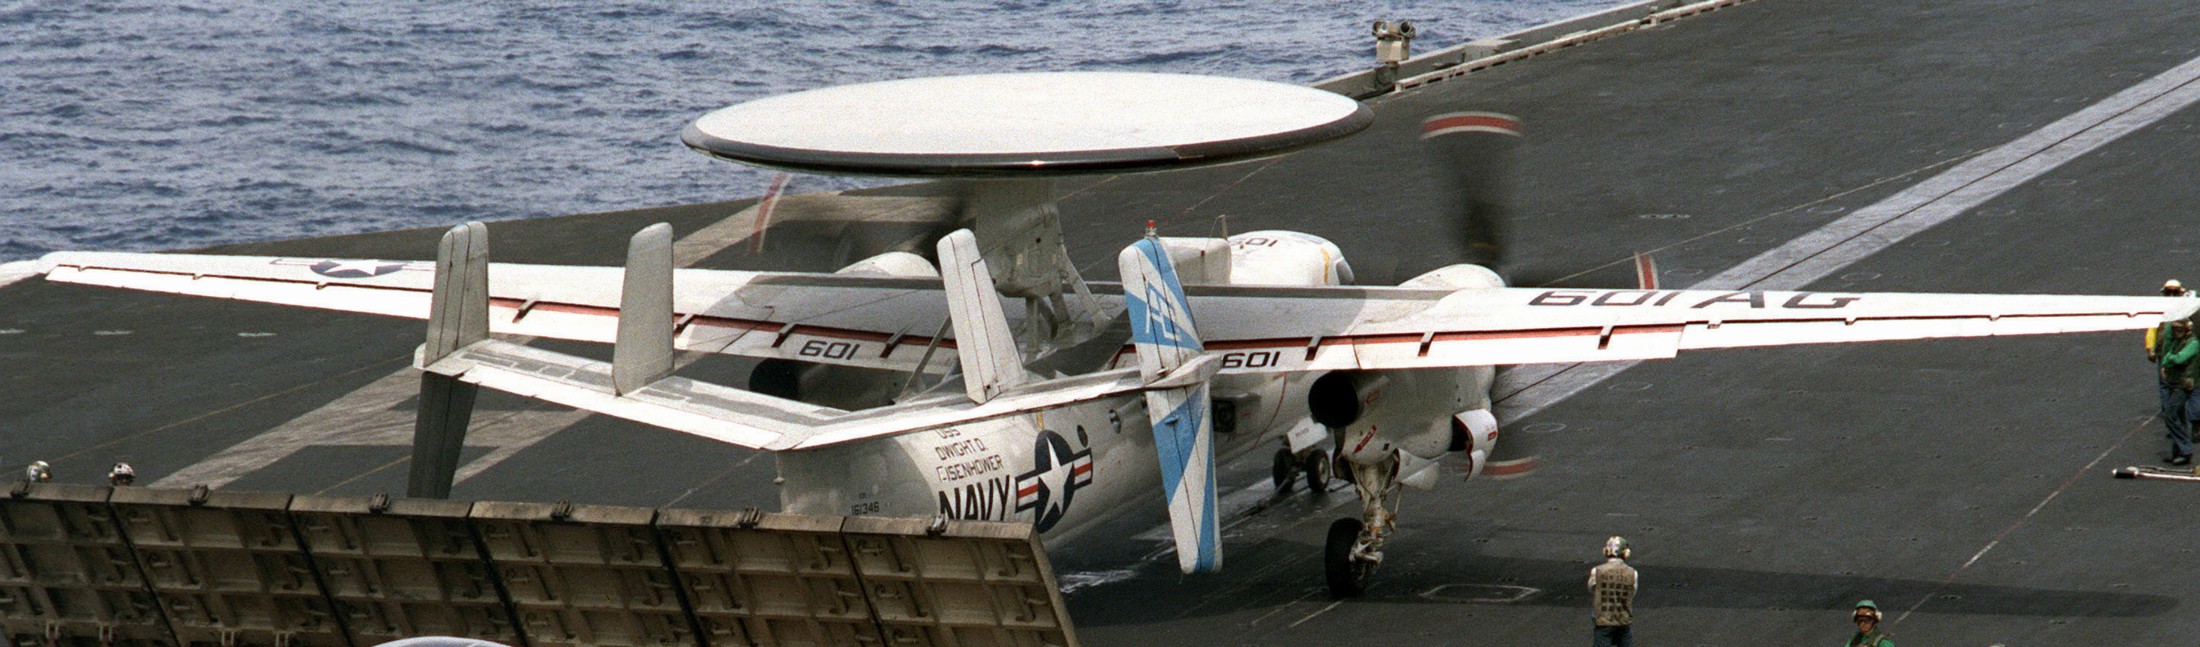 vaw-121 bluetails carrier airborne early warning squadron us navy e-2c hawkeye cvw-7 uss dwight d. eisenhower cvn-69 109